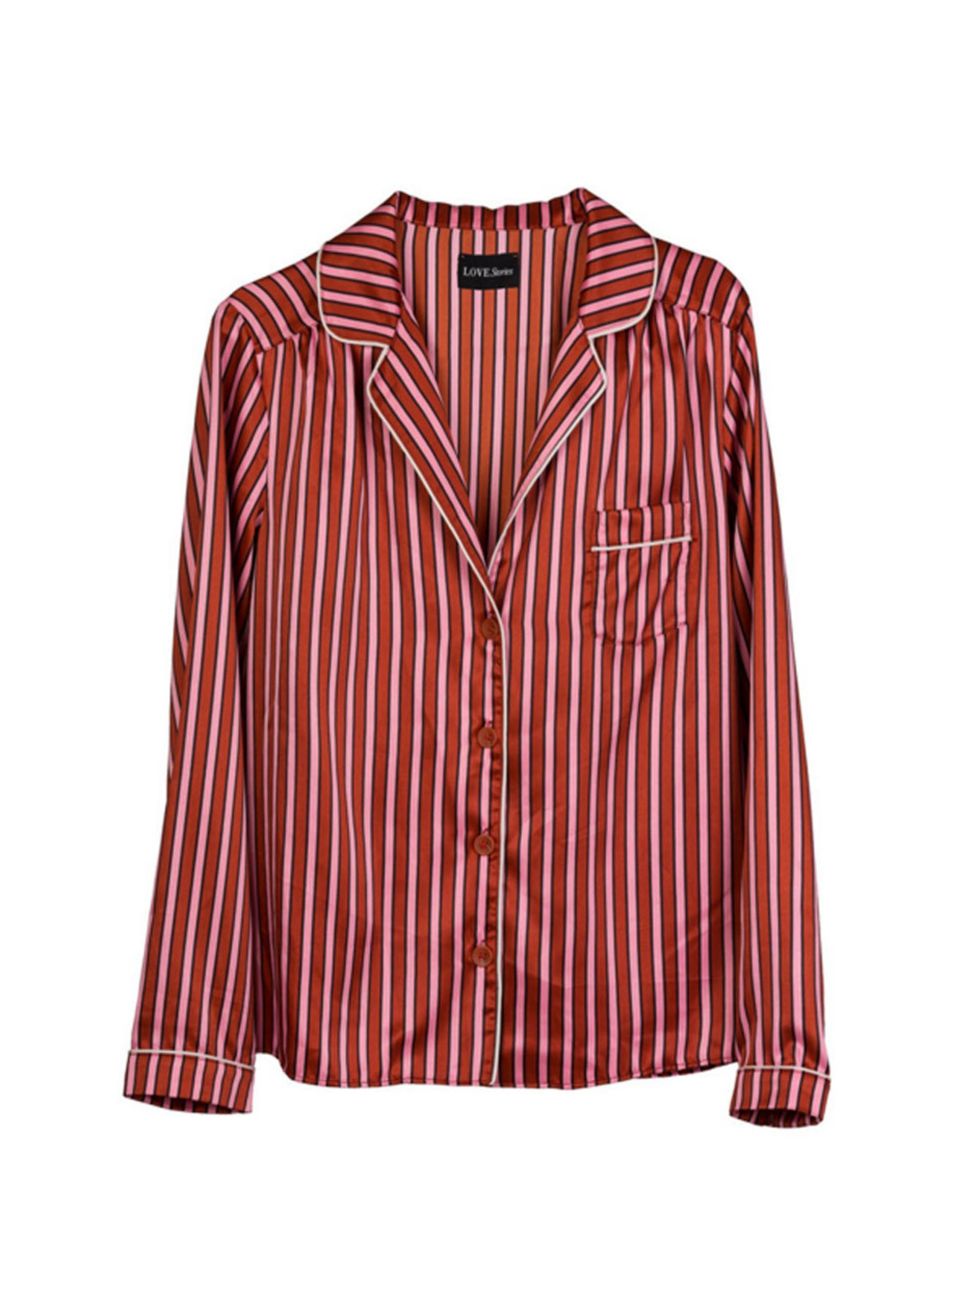 Product, Dress shirt, Collar, Sleeve, Textile, Shirt, Pattern, Red, White, Orange, 